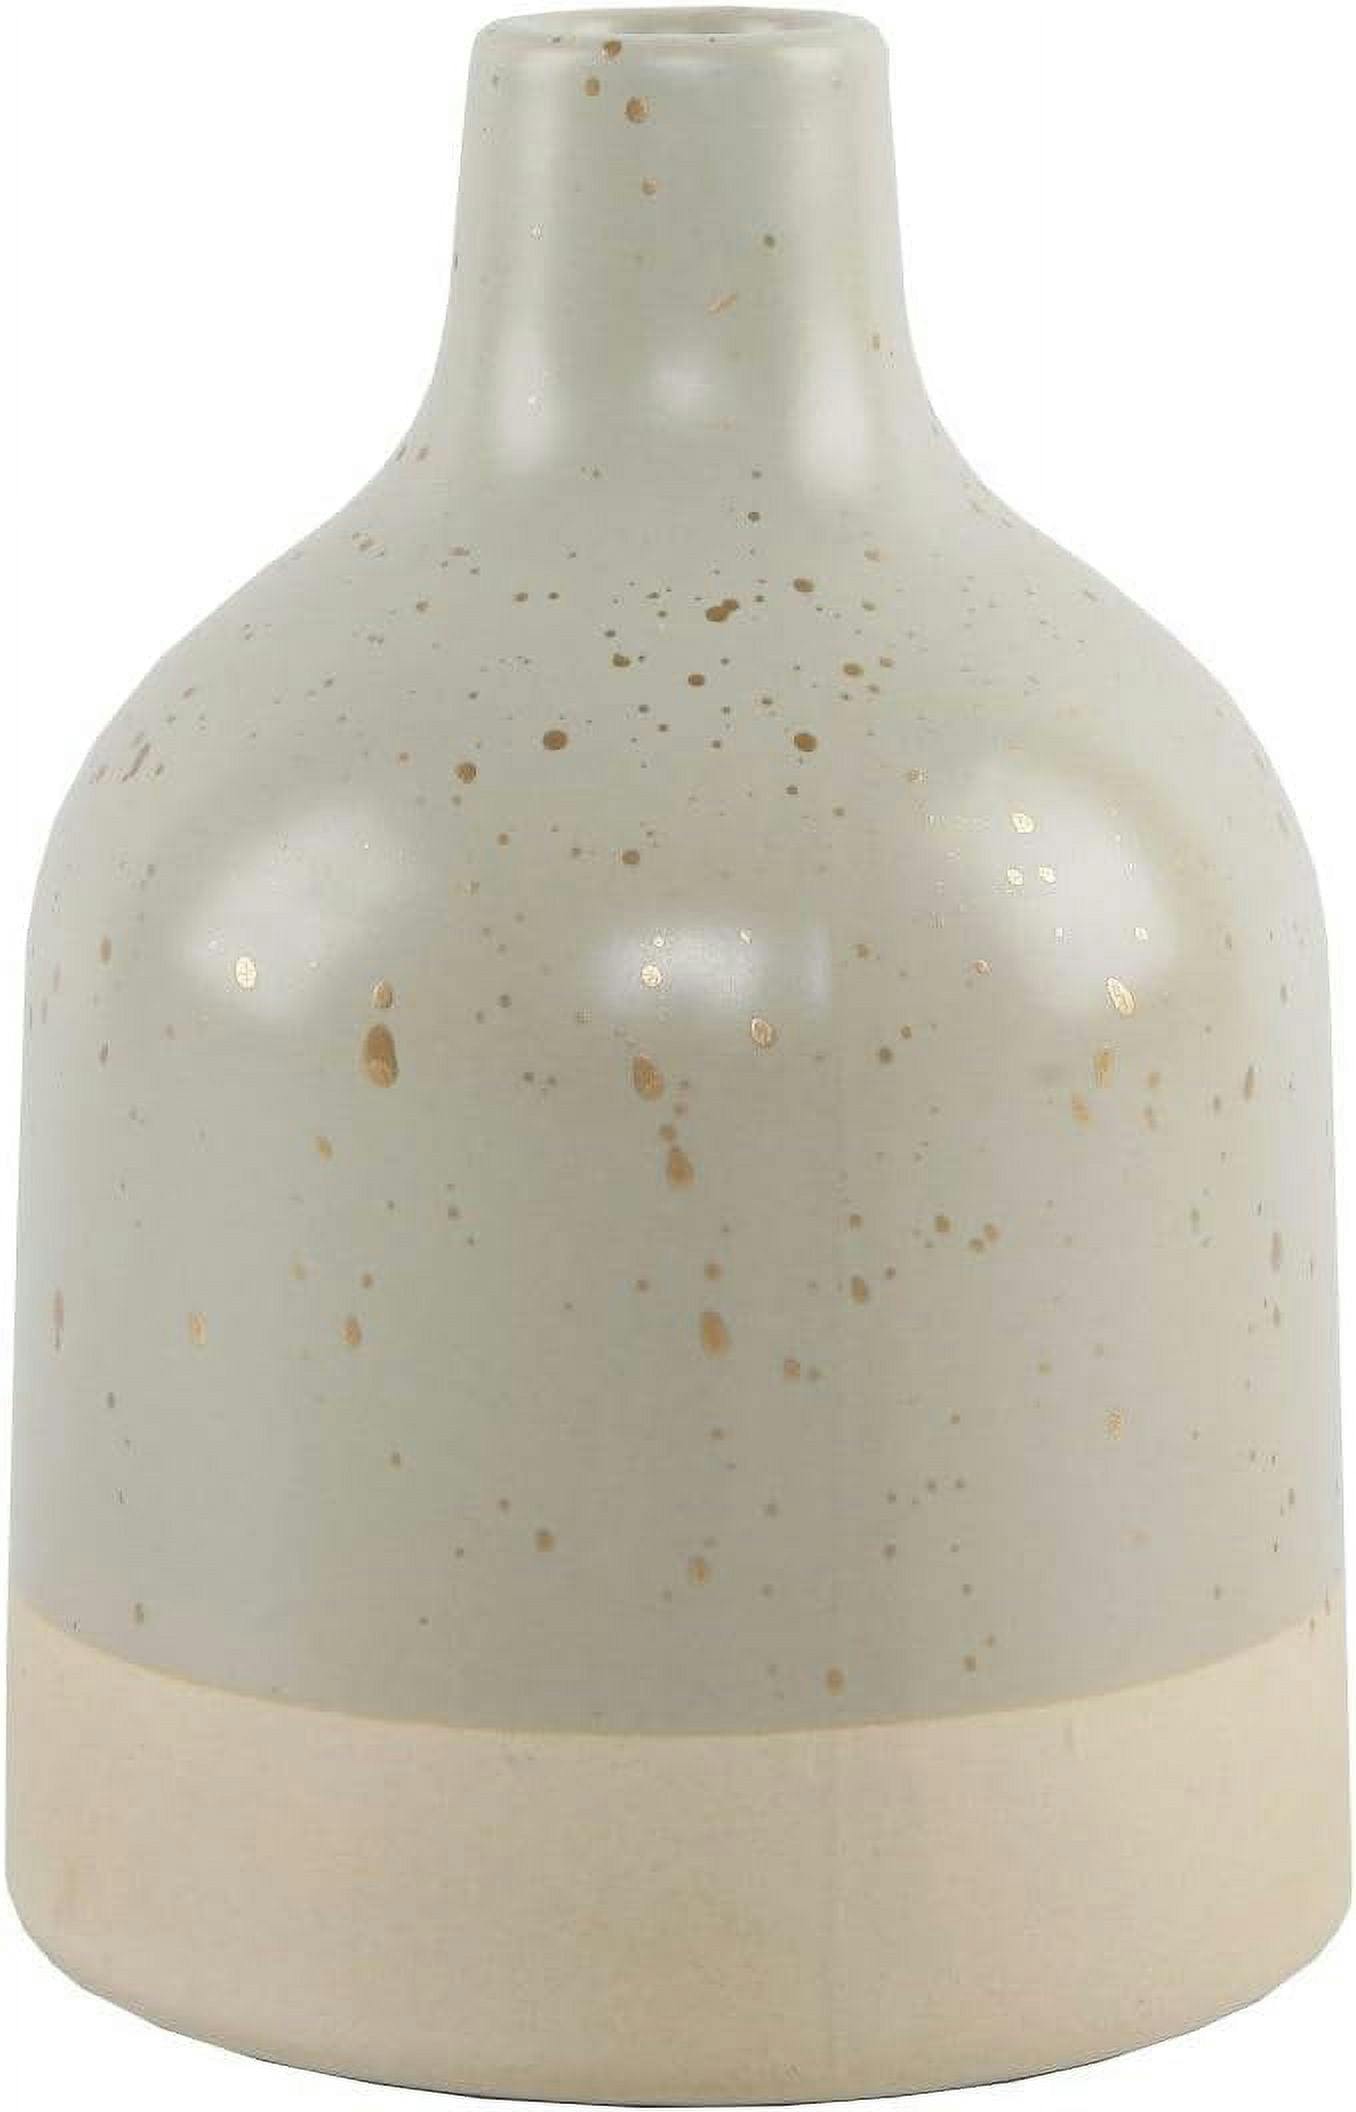 Chic Two-Tone Speckle Ceramic Decorative Vase, Sage 7"H